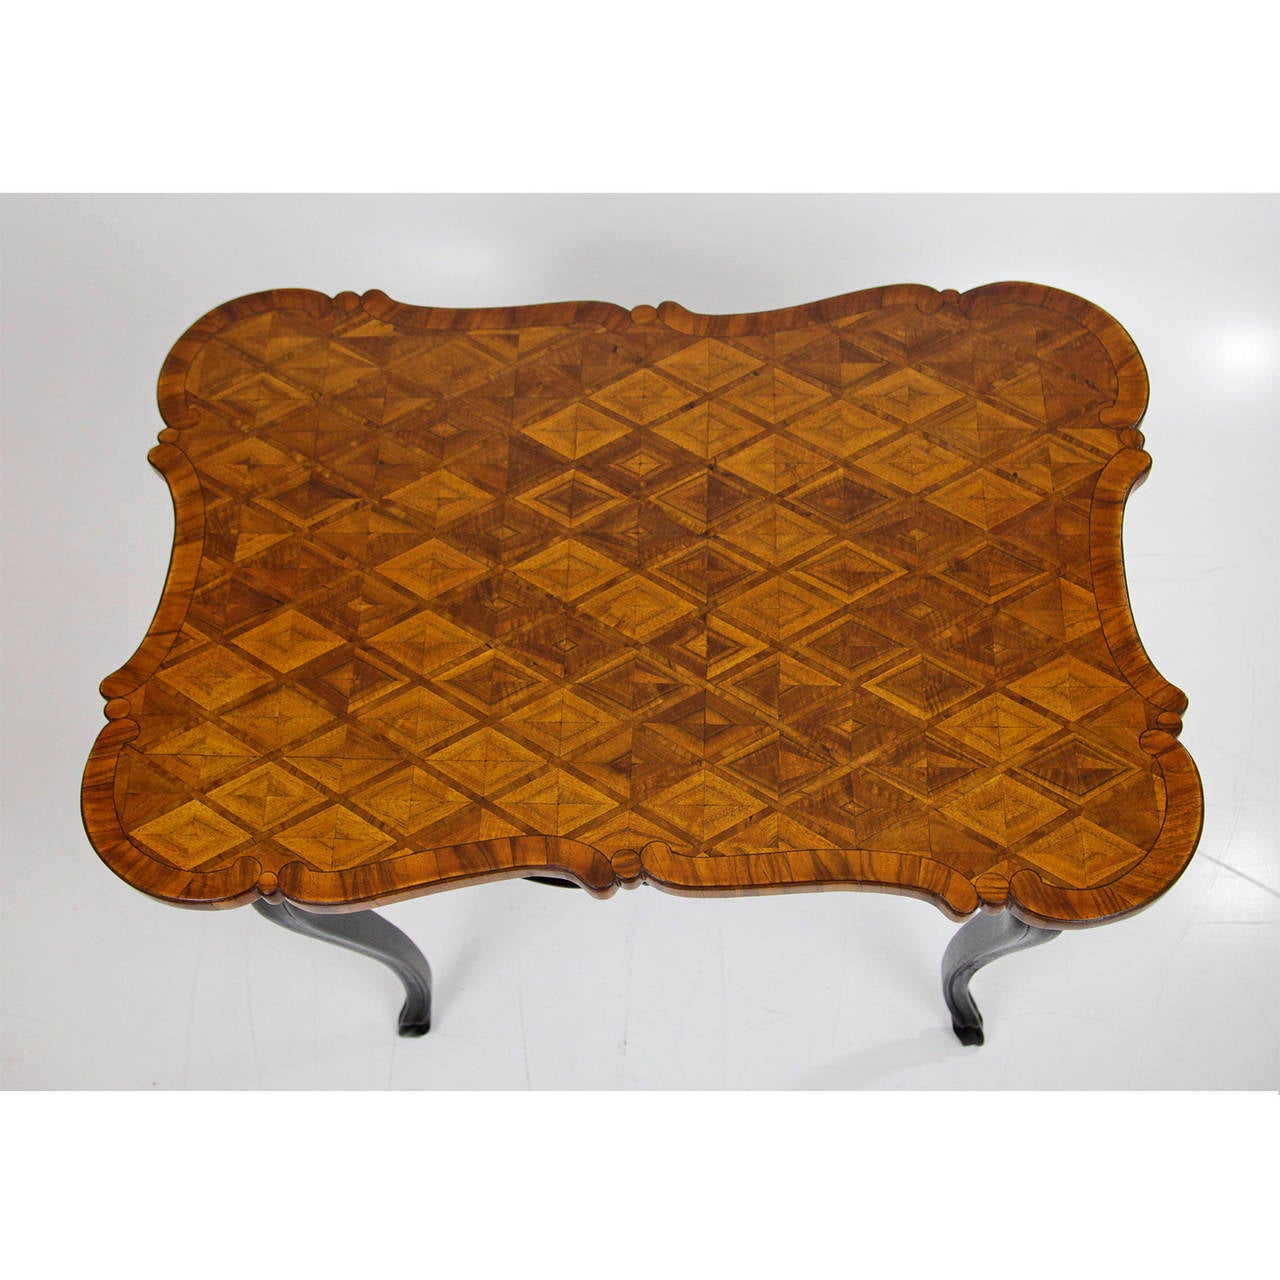 Gorgeous south german gambling Table, circa 1770´s, walnut veneer, base solid oak, ebonised.